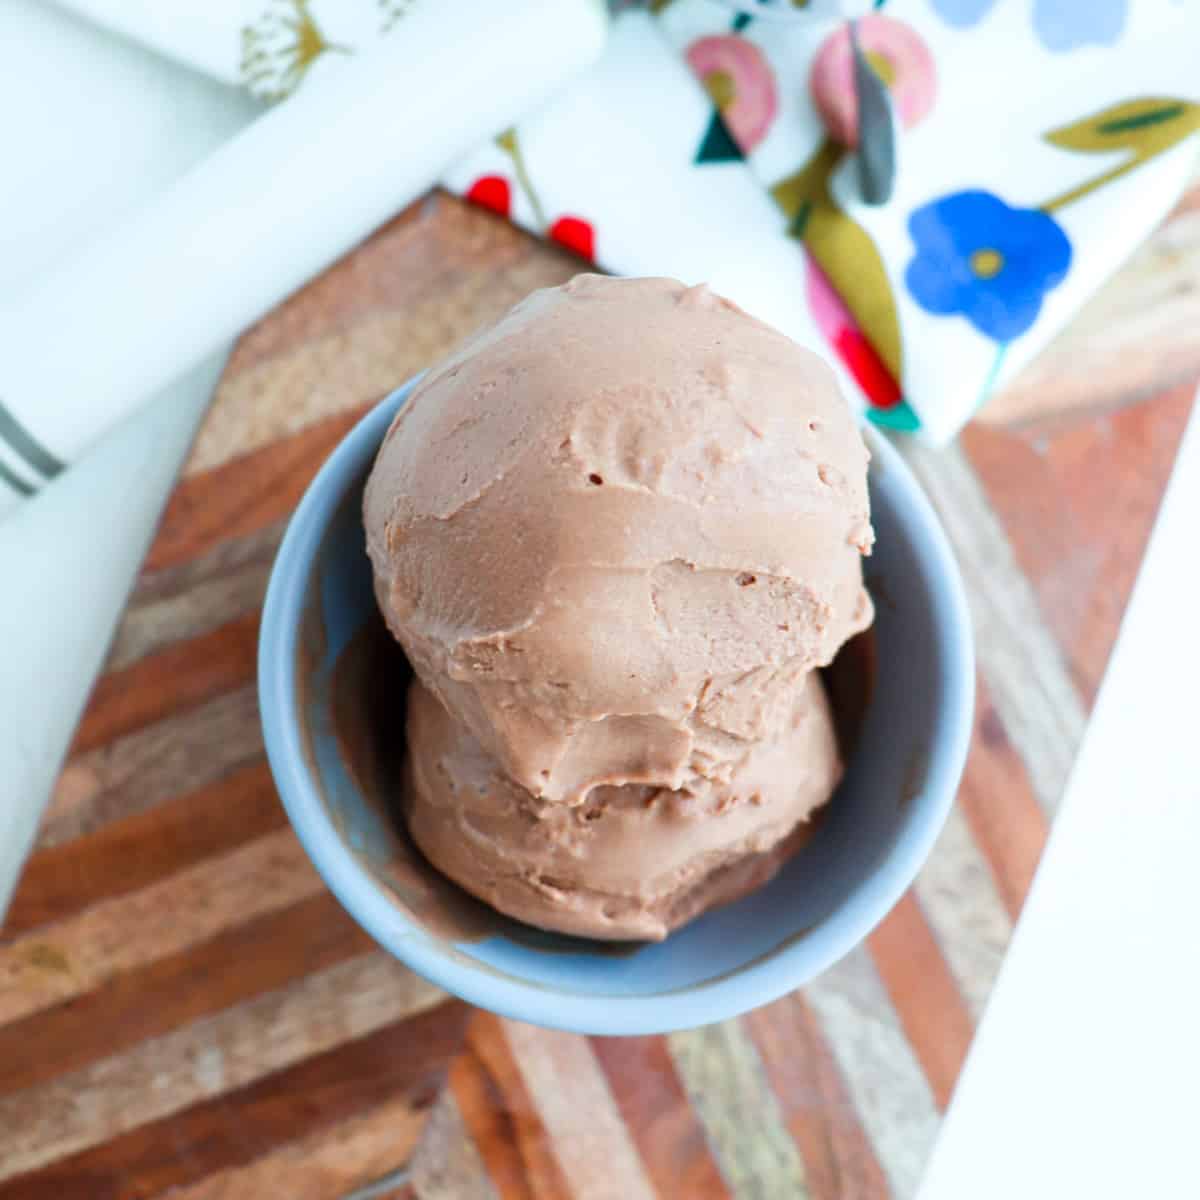 Ninja Creami Chocolate Ice Cream Recipe (2 Ingredients!) - The Balanced  Nutritionist